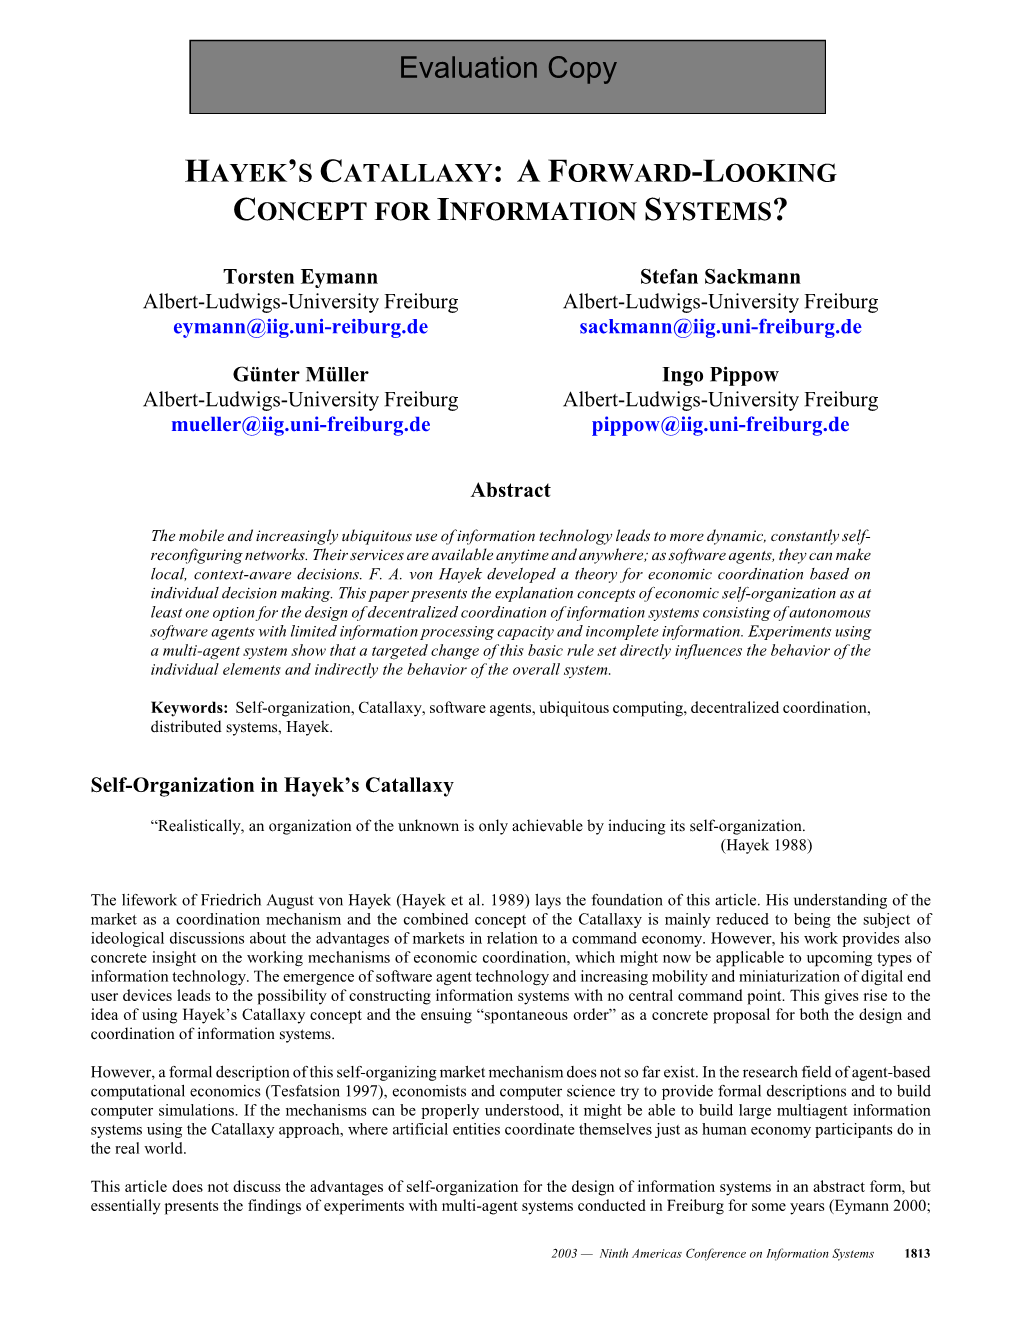 Hayek's Catallaxy: a Forward-Looking Concept For